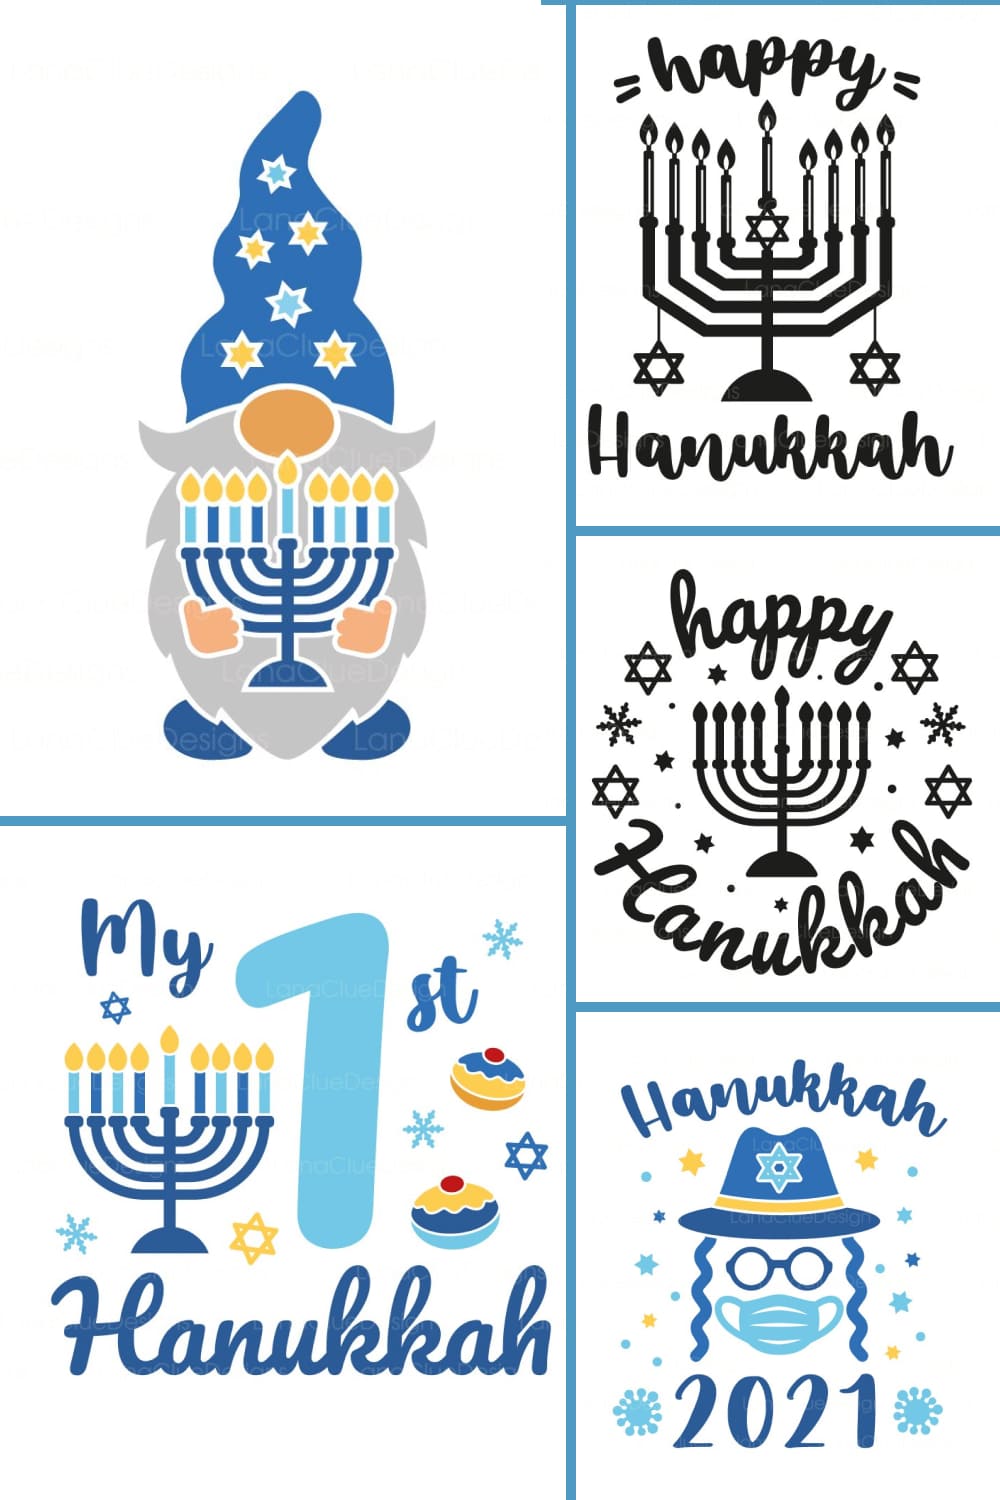 Various pictures of Hanukkah greetings.